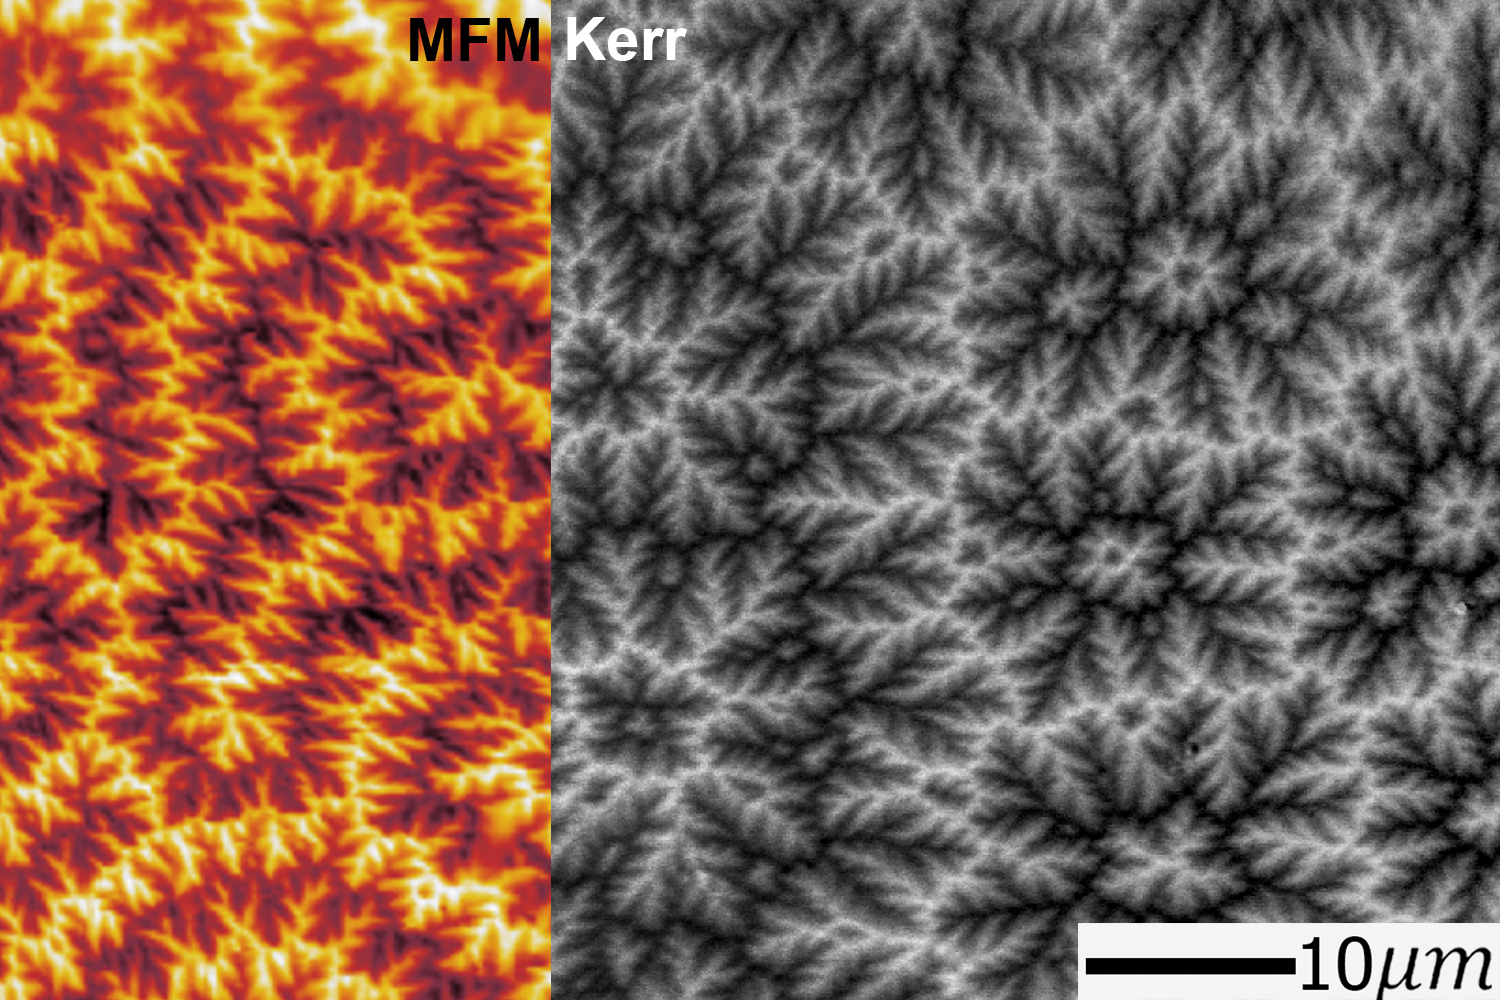 High-resolution Kerr Microscopy